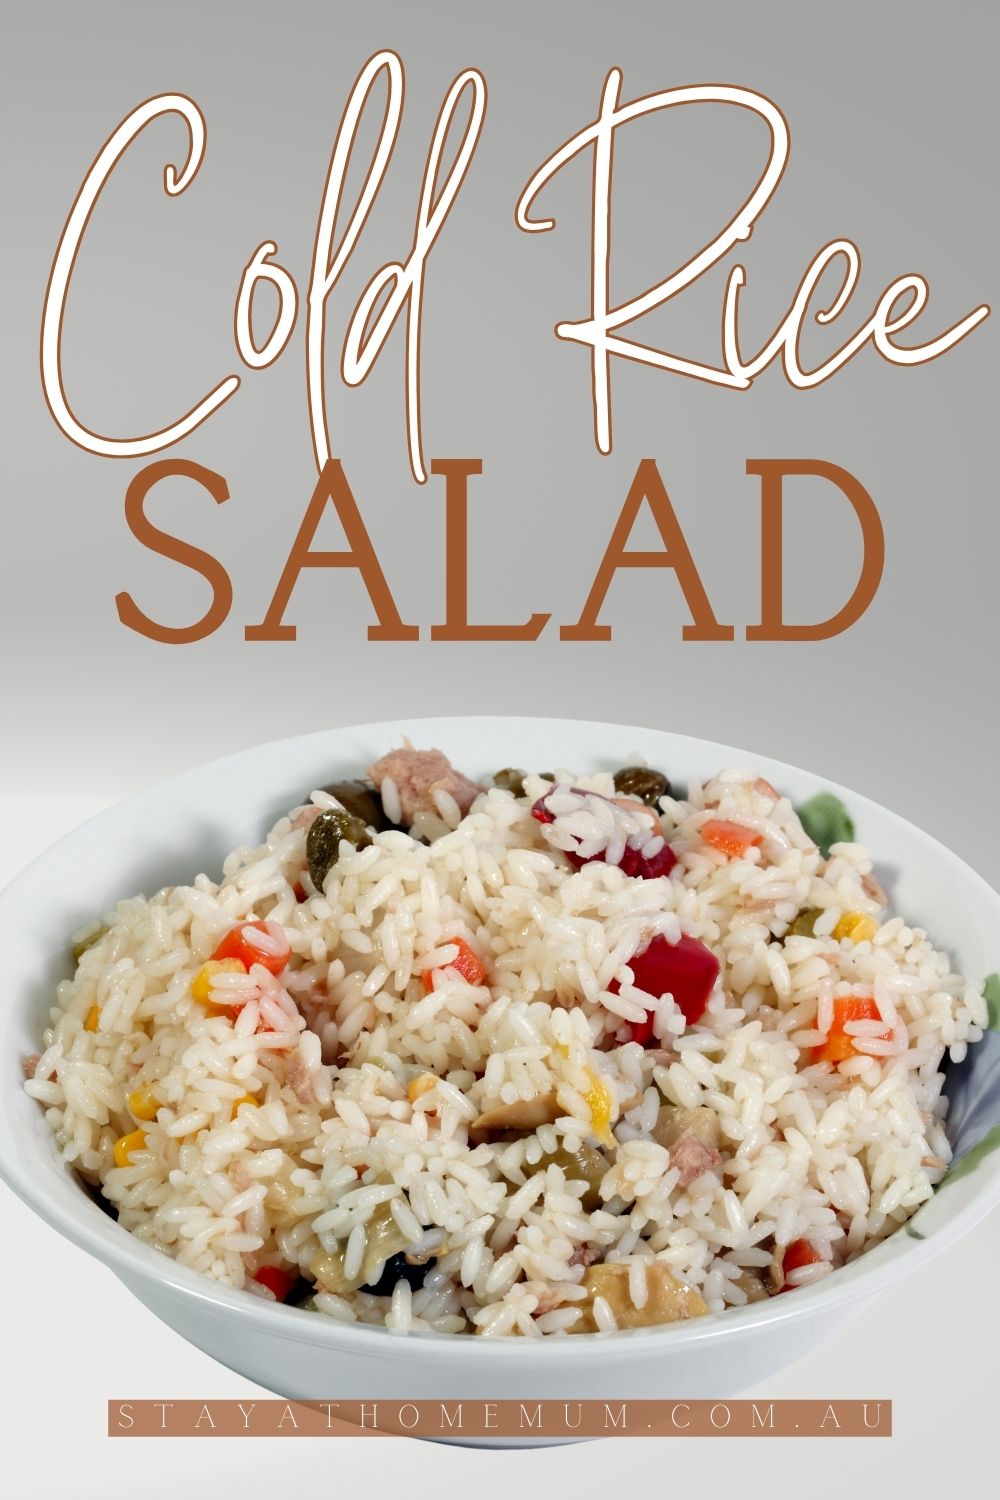 Cold Rice Salad Pinnable